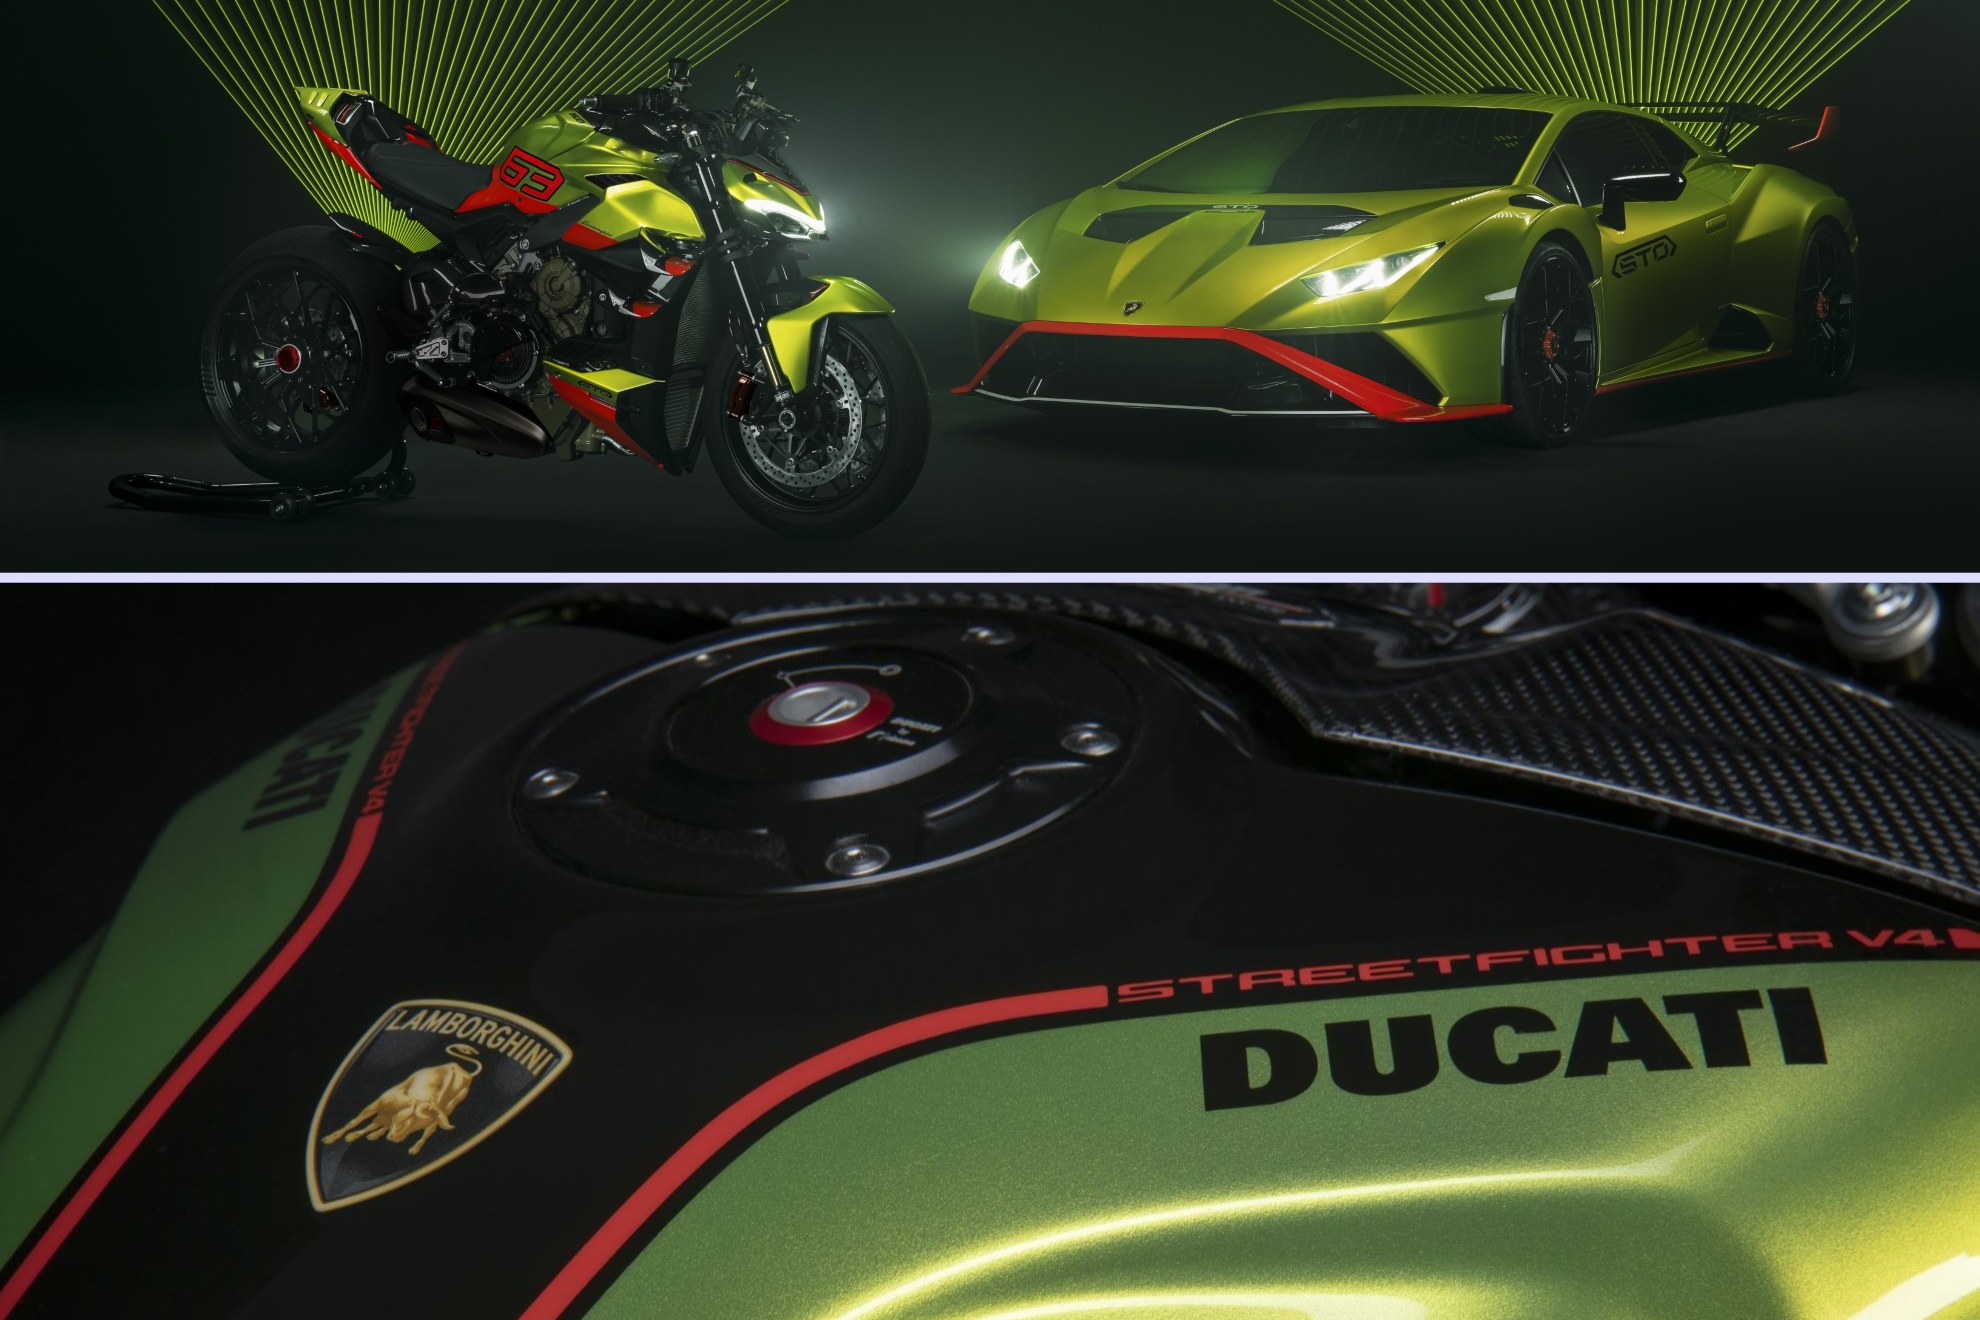 La Ducati Streetfighter V4 Lamborghini, en imágenes